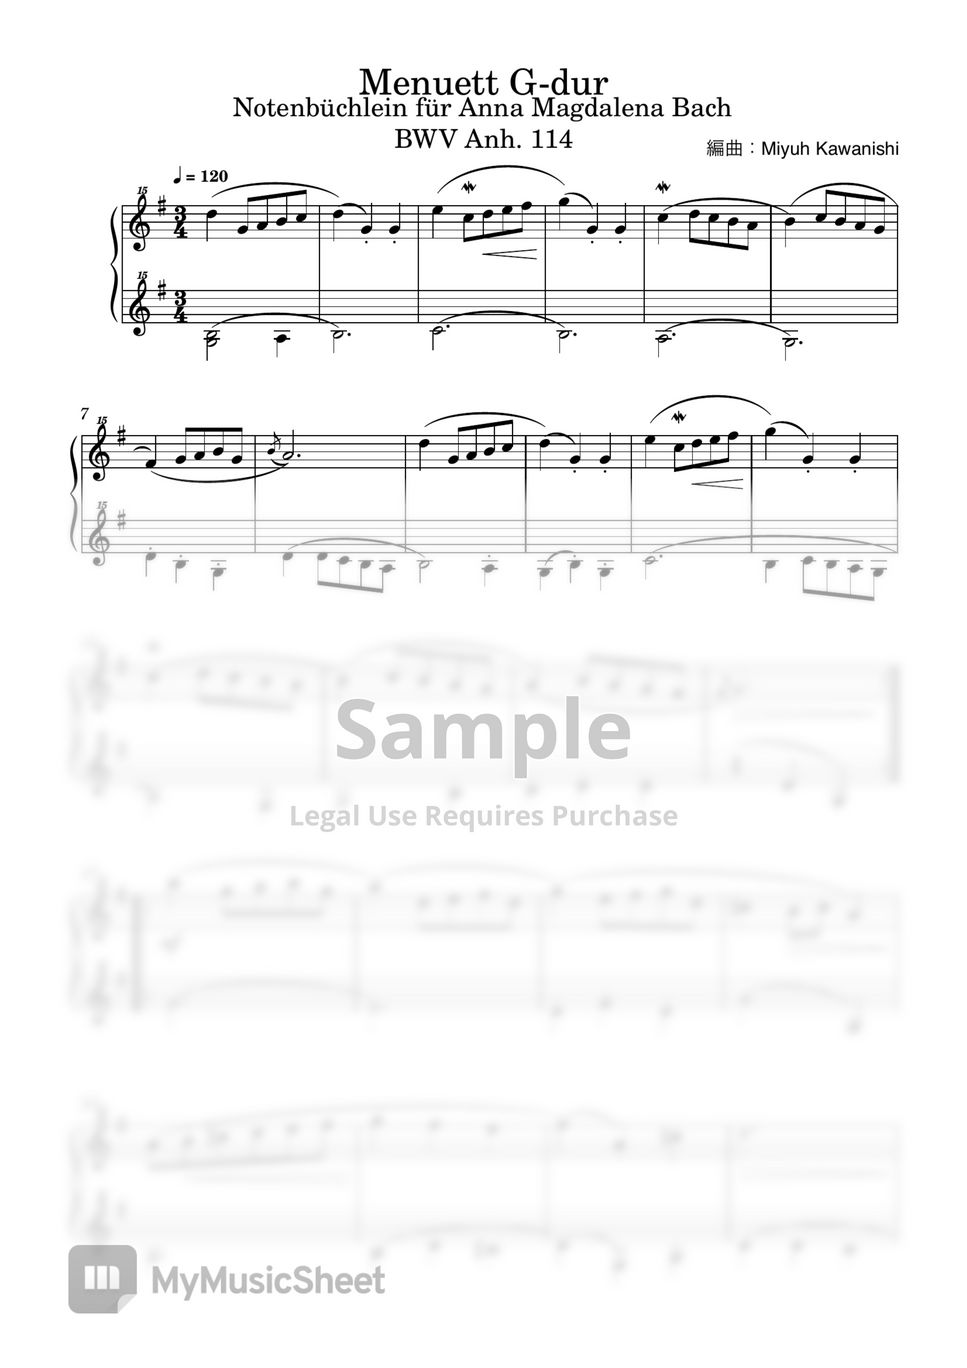 Bach / Christian Petzold - Menuett G-dur BWV Anh.114 (toy piano / 32 keys / classical) by Miyuh Kawanishi